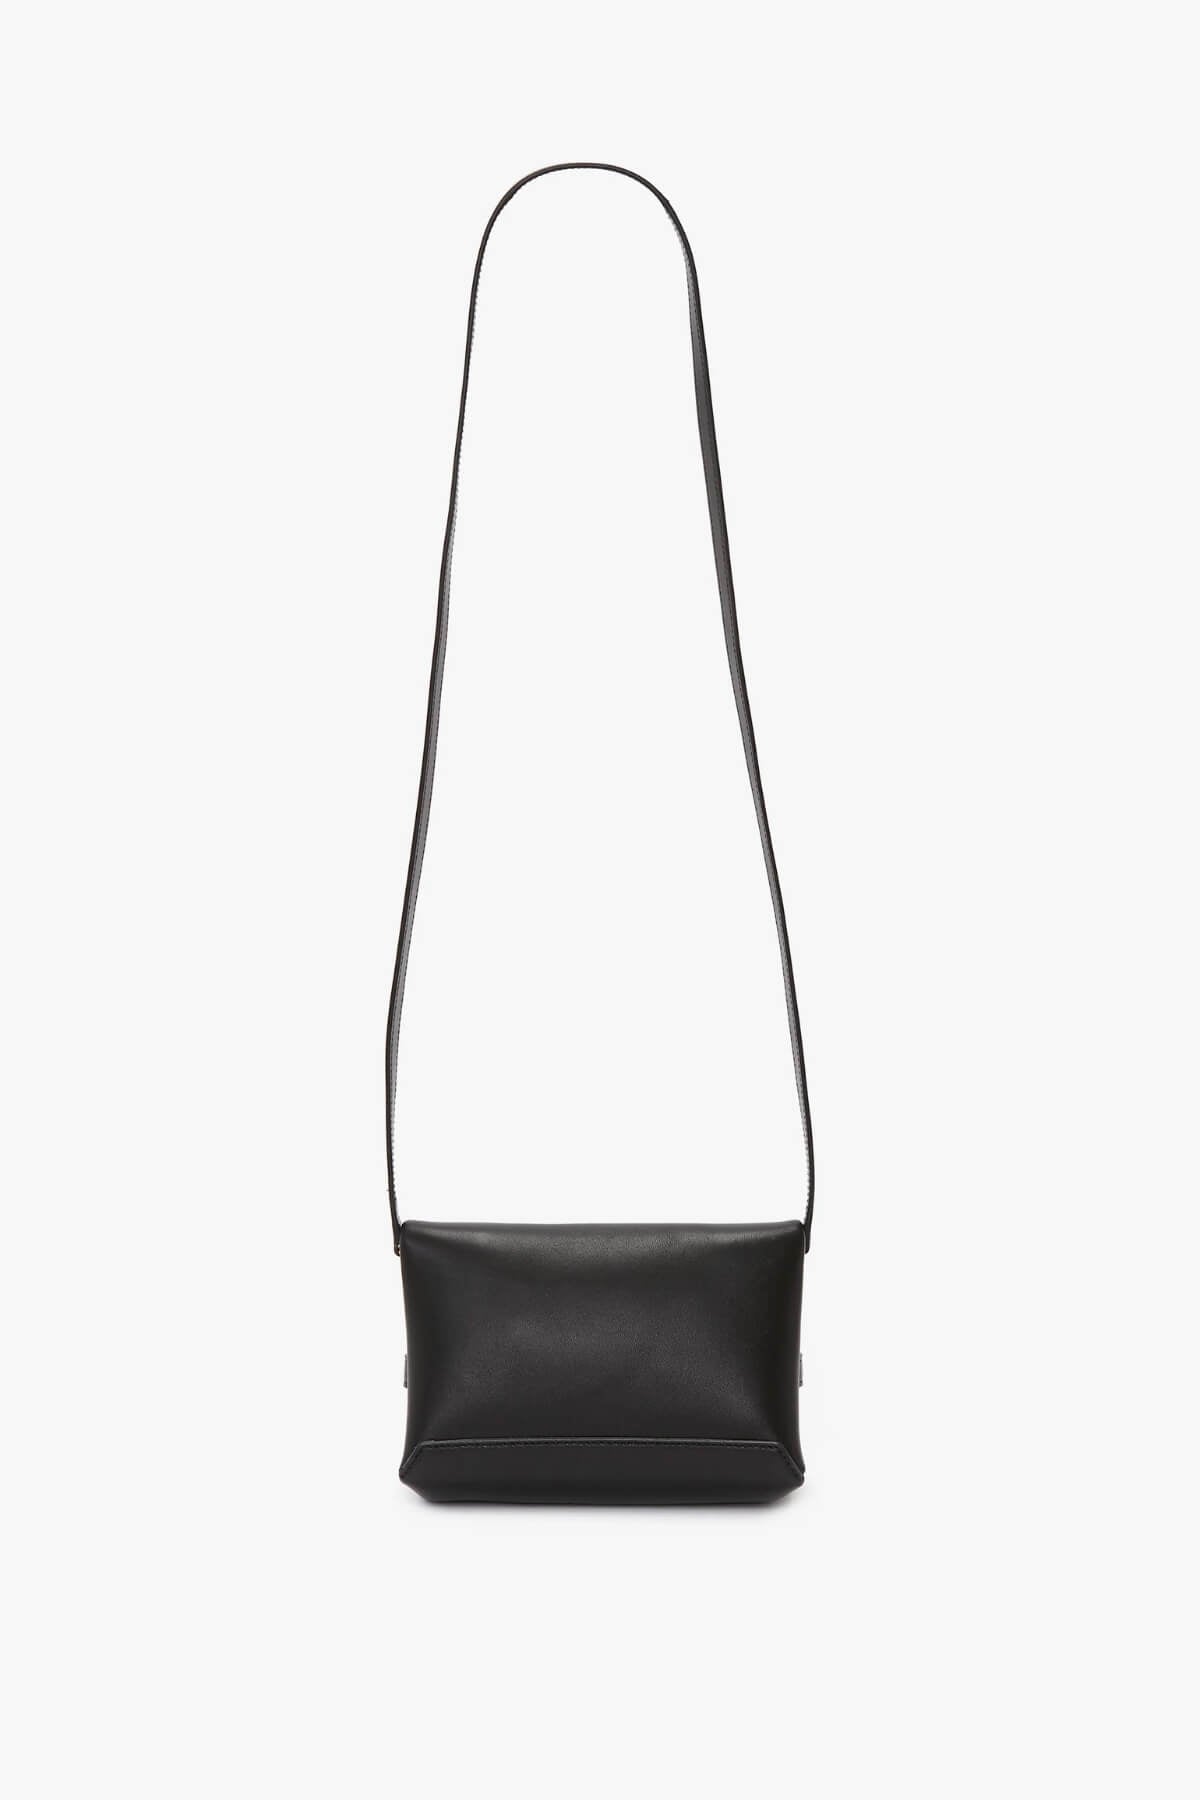 Victoria Beckham Chain Mini Pouch Bag - Black